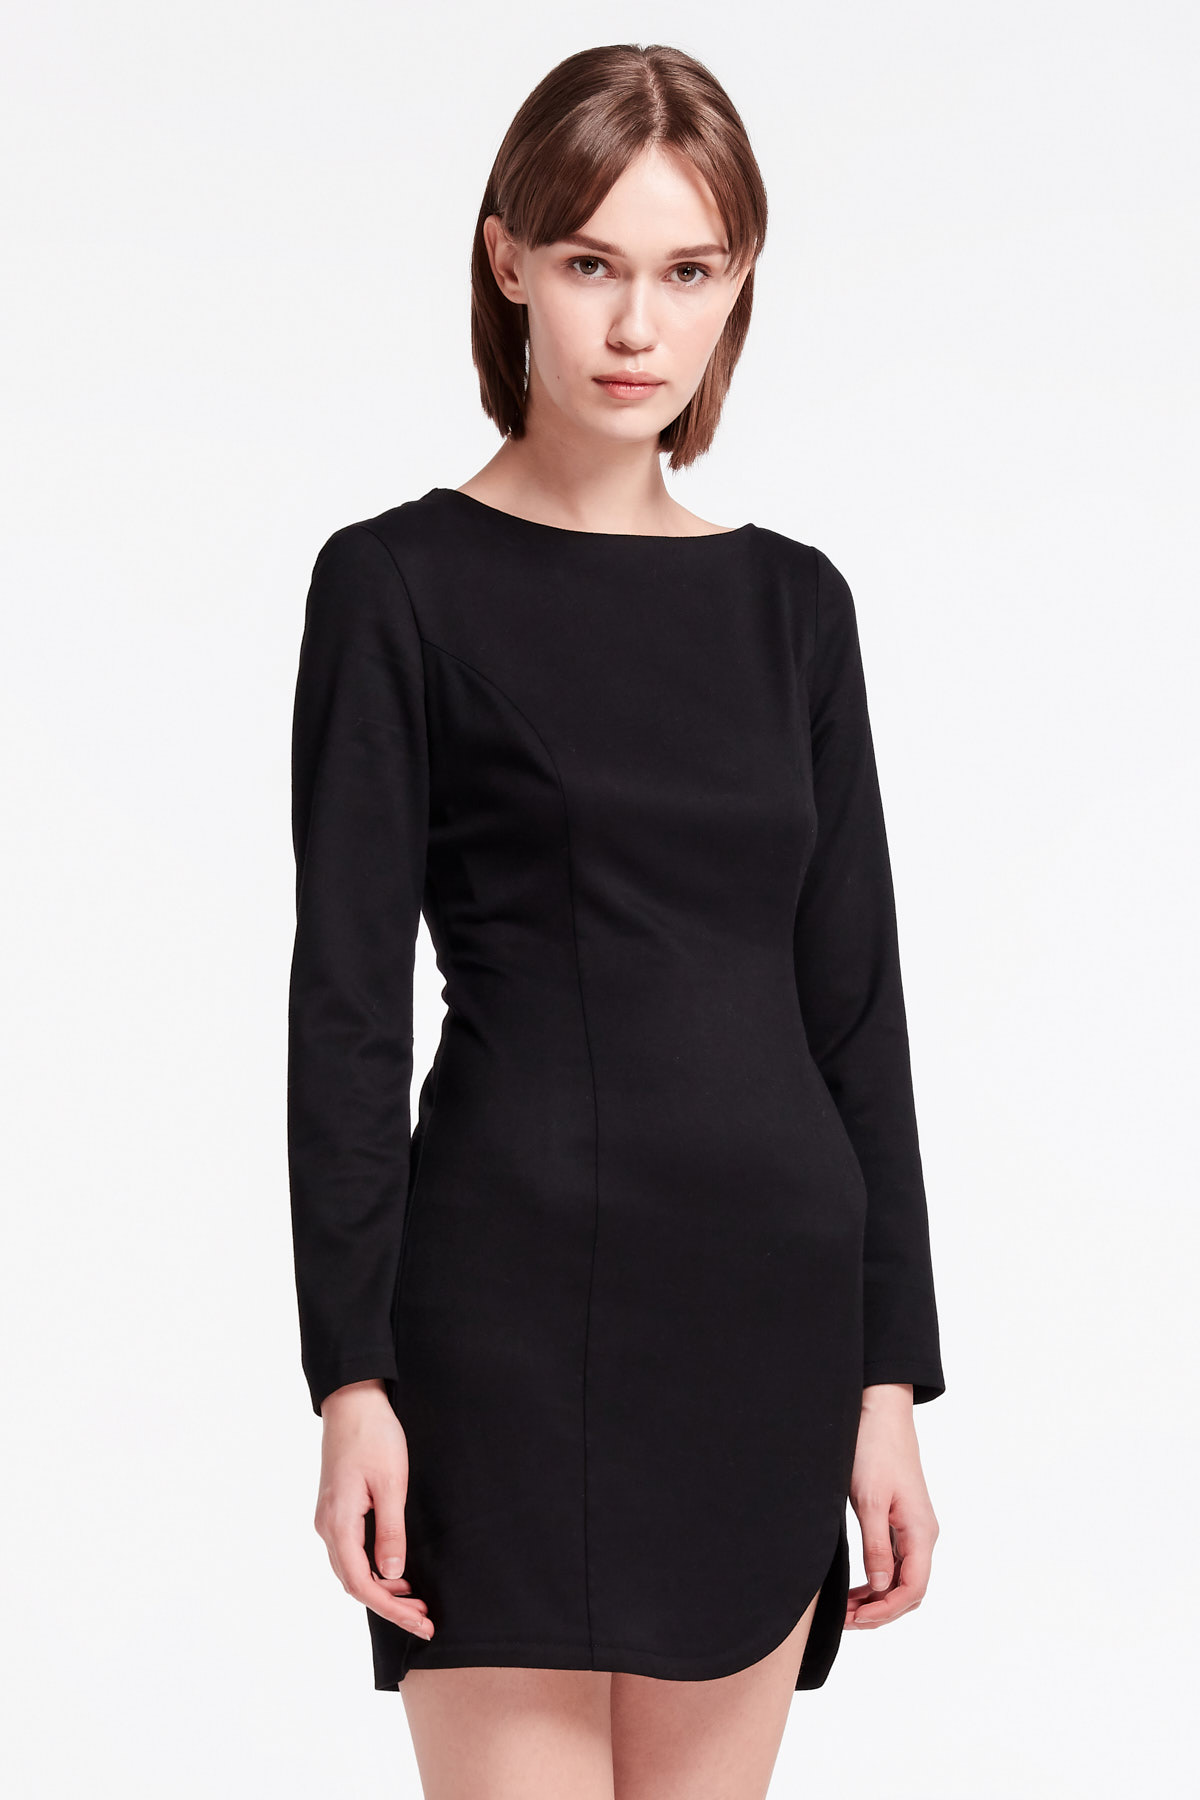 Black dress with above-knee asymmetric cut, photo 2